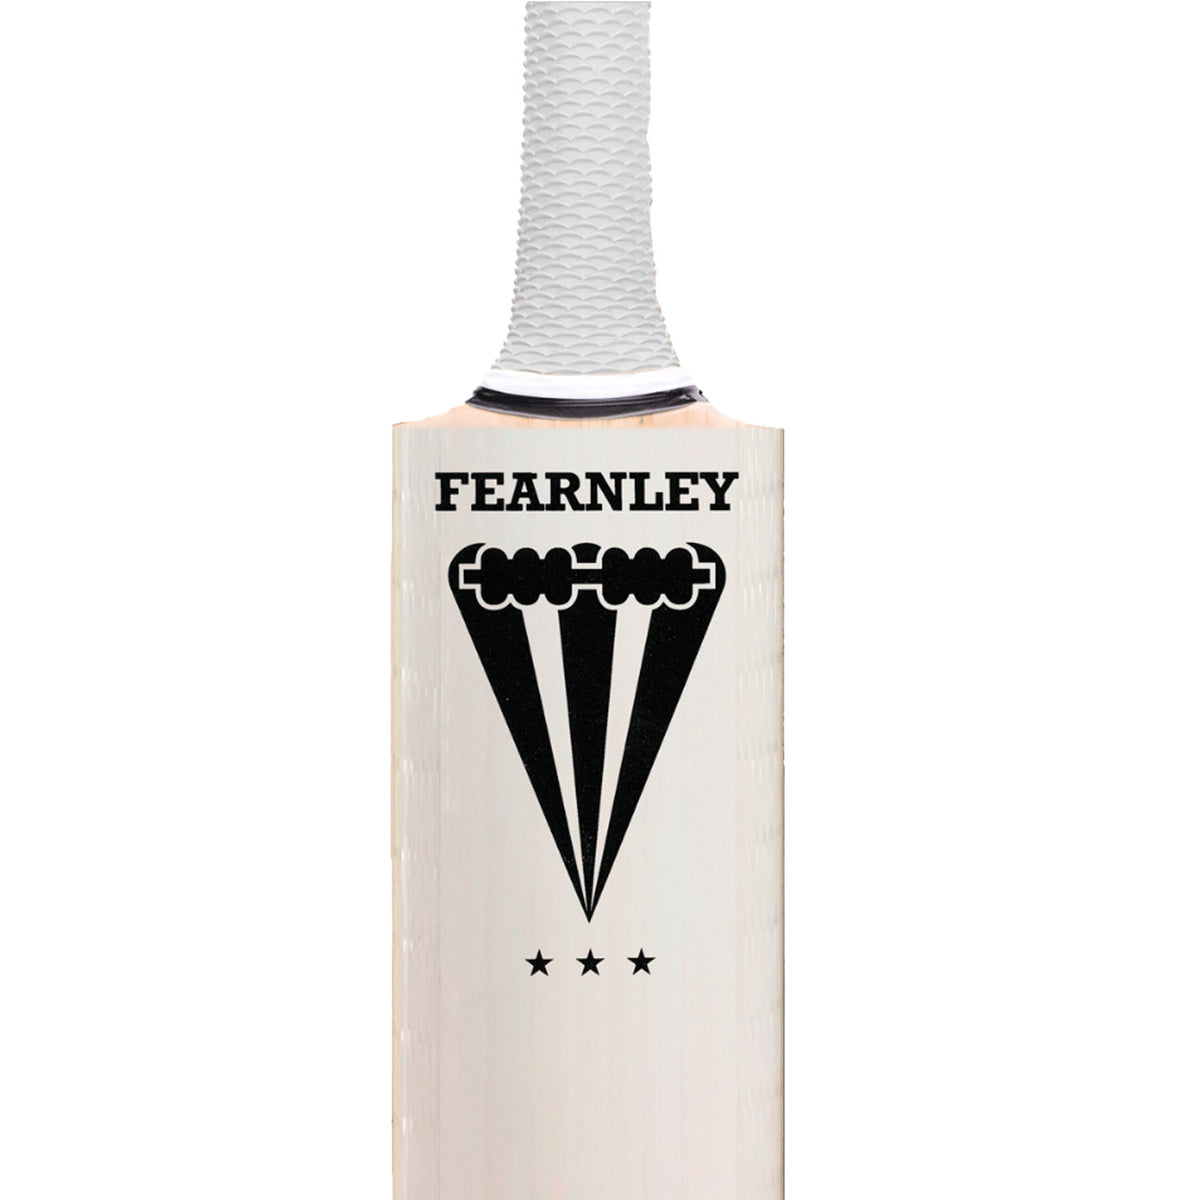 Duncan Fearnley Junior 3 Star Cricket Bat - White